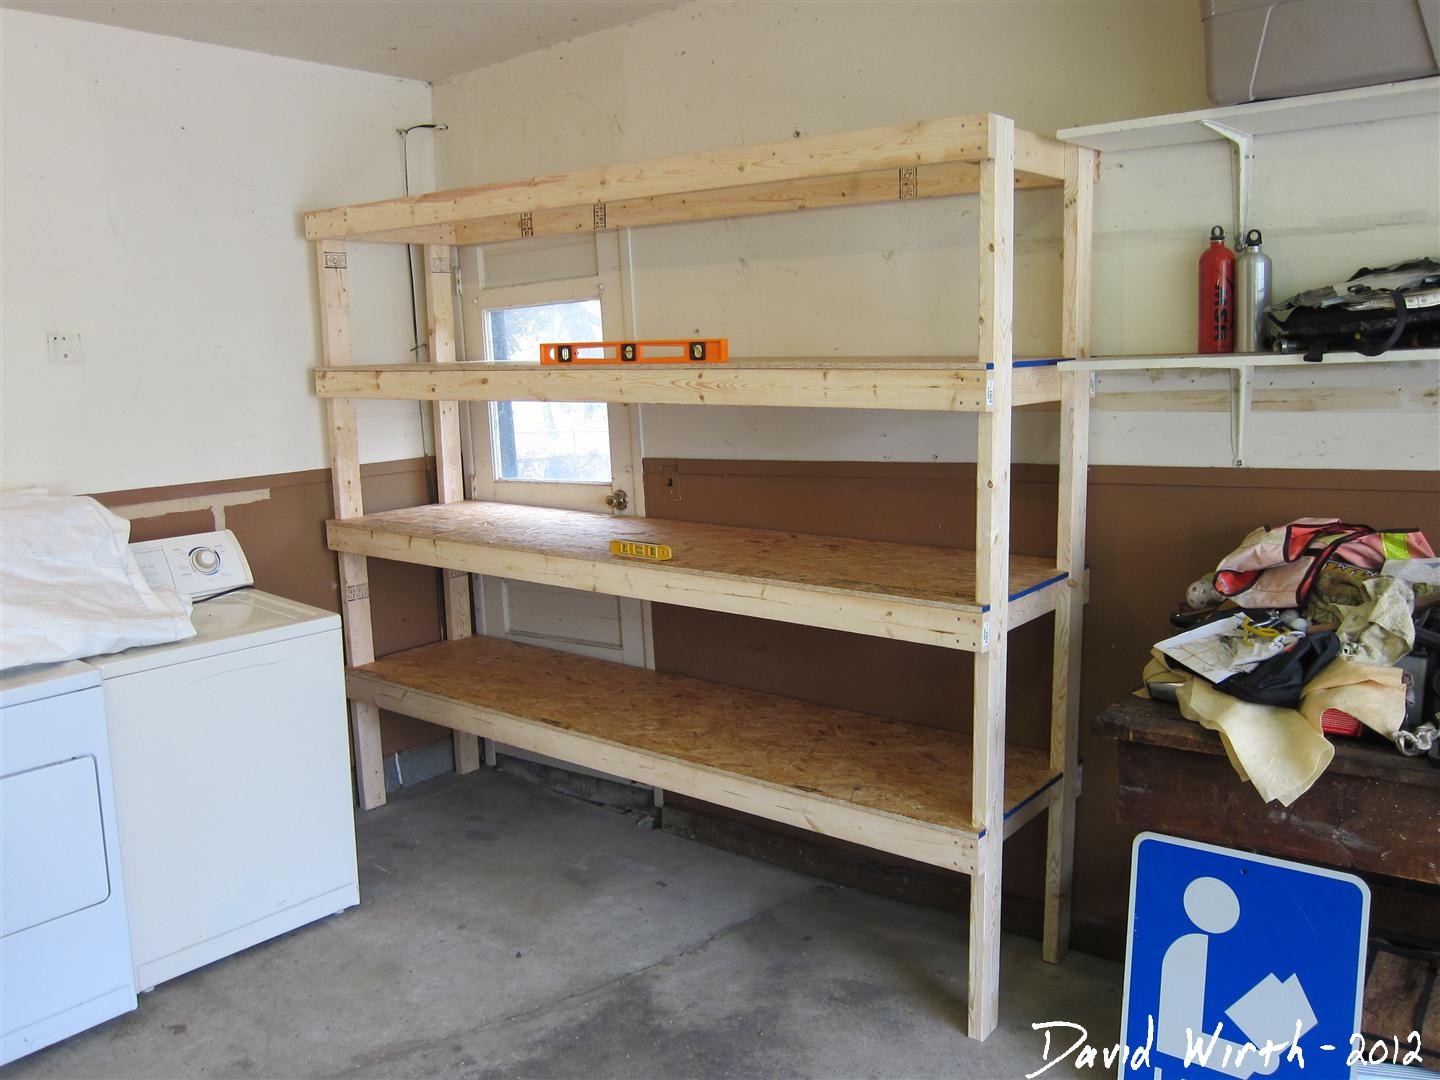 How to Build Garage Shelves